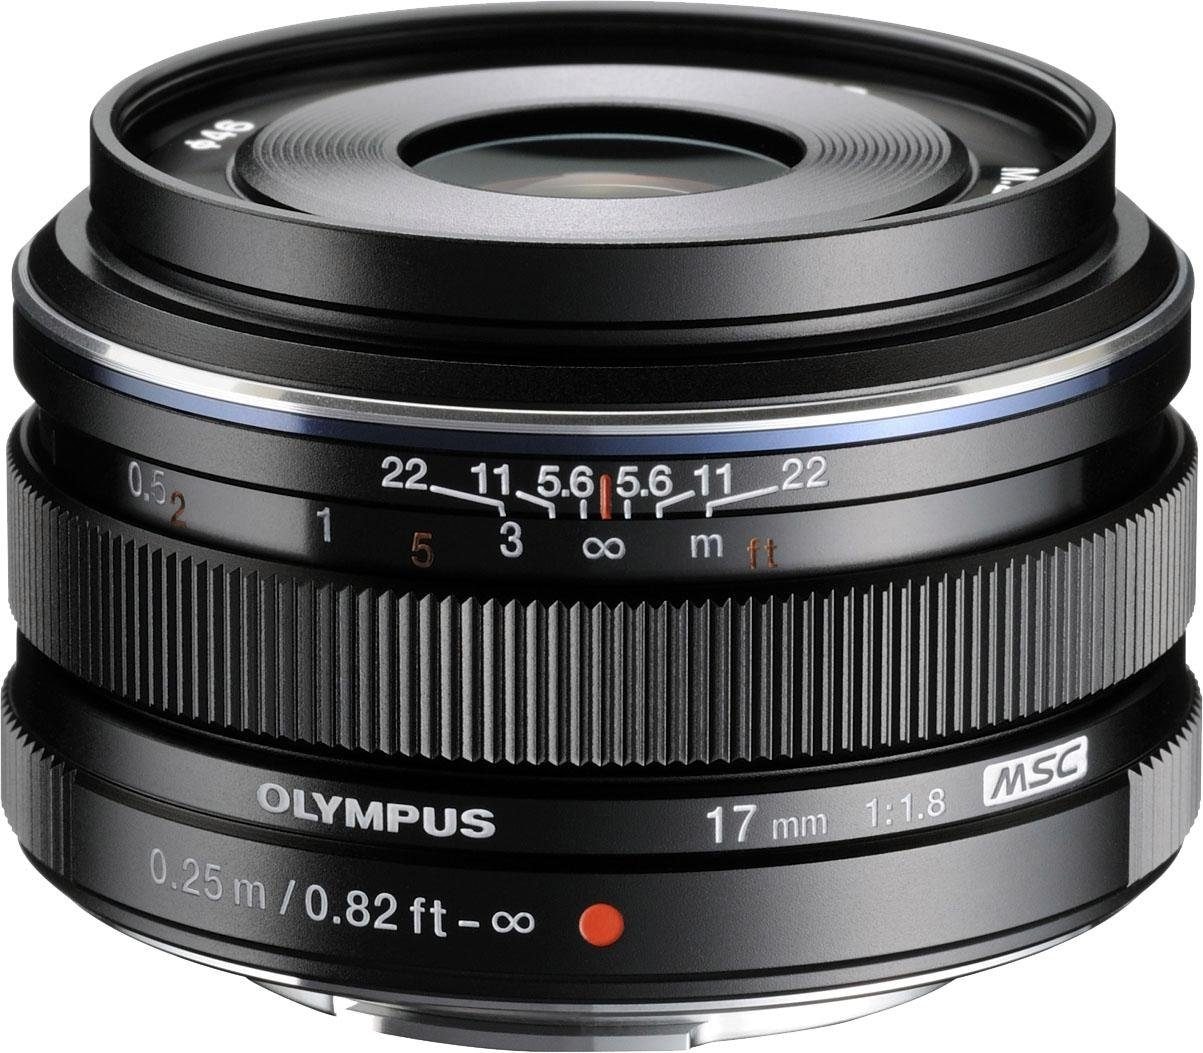 Olympus Weitwinkelobjektiv »M.ZUIKO DIGITAL 17 mm F1.8«, passend für Olympus & OM SYSTEM MFT Kameras